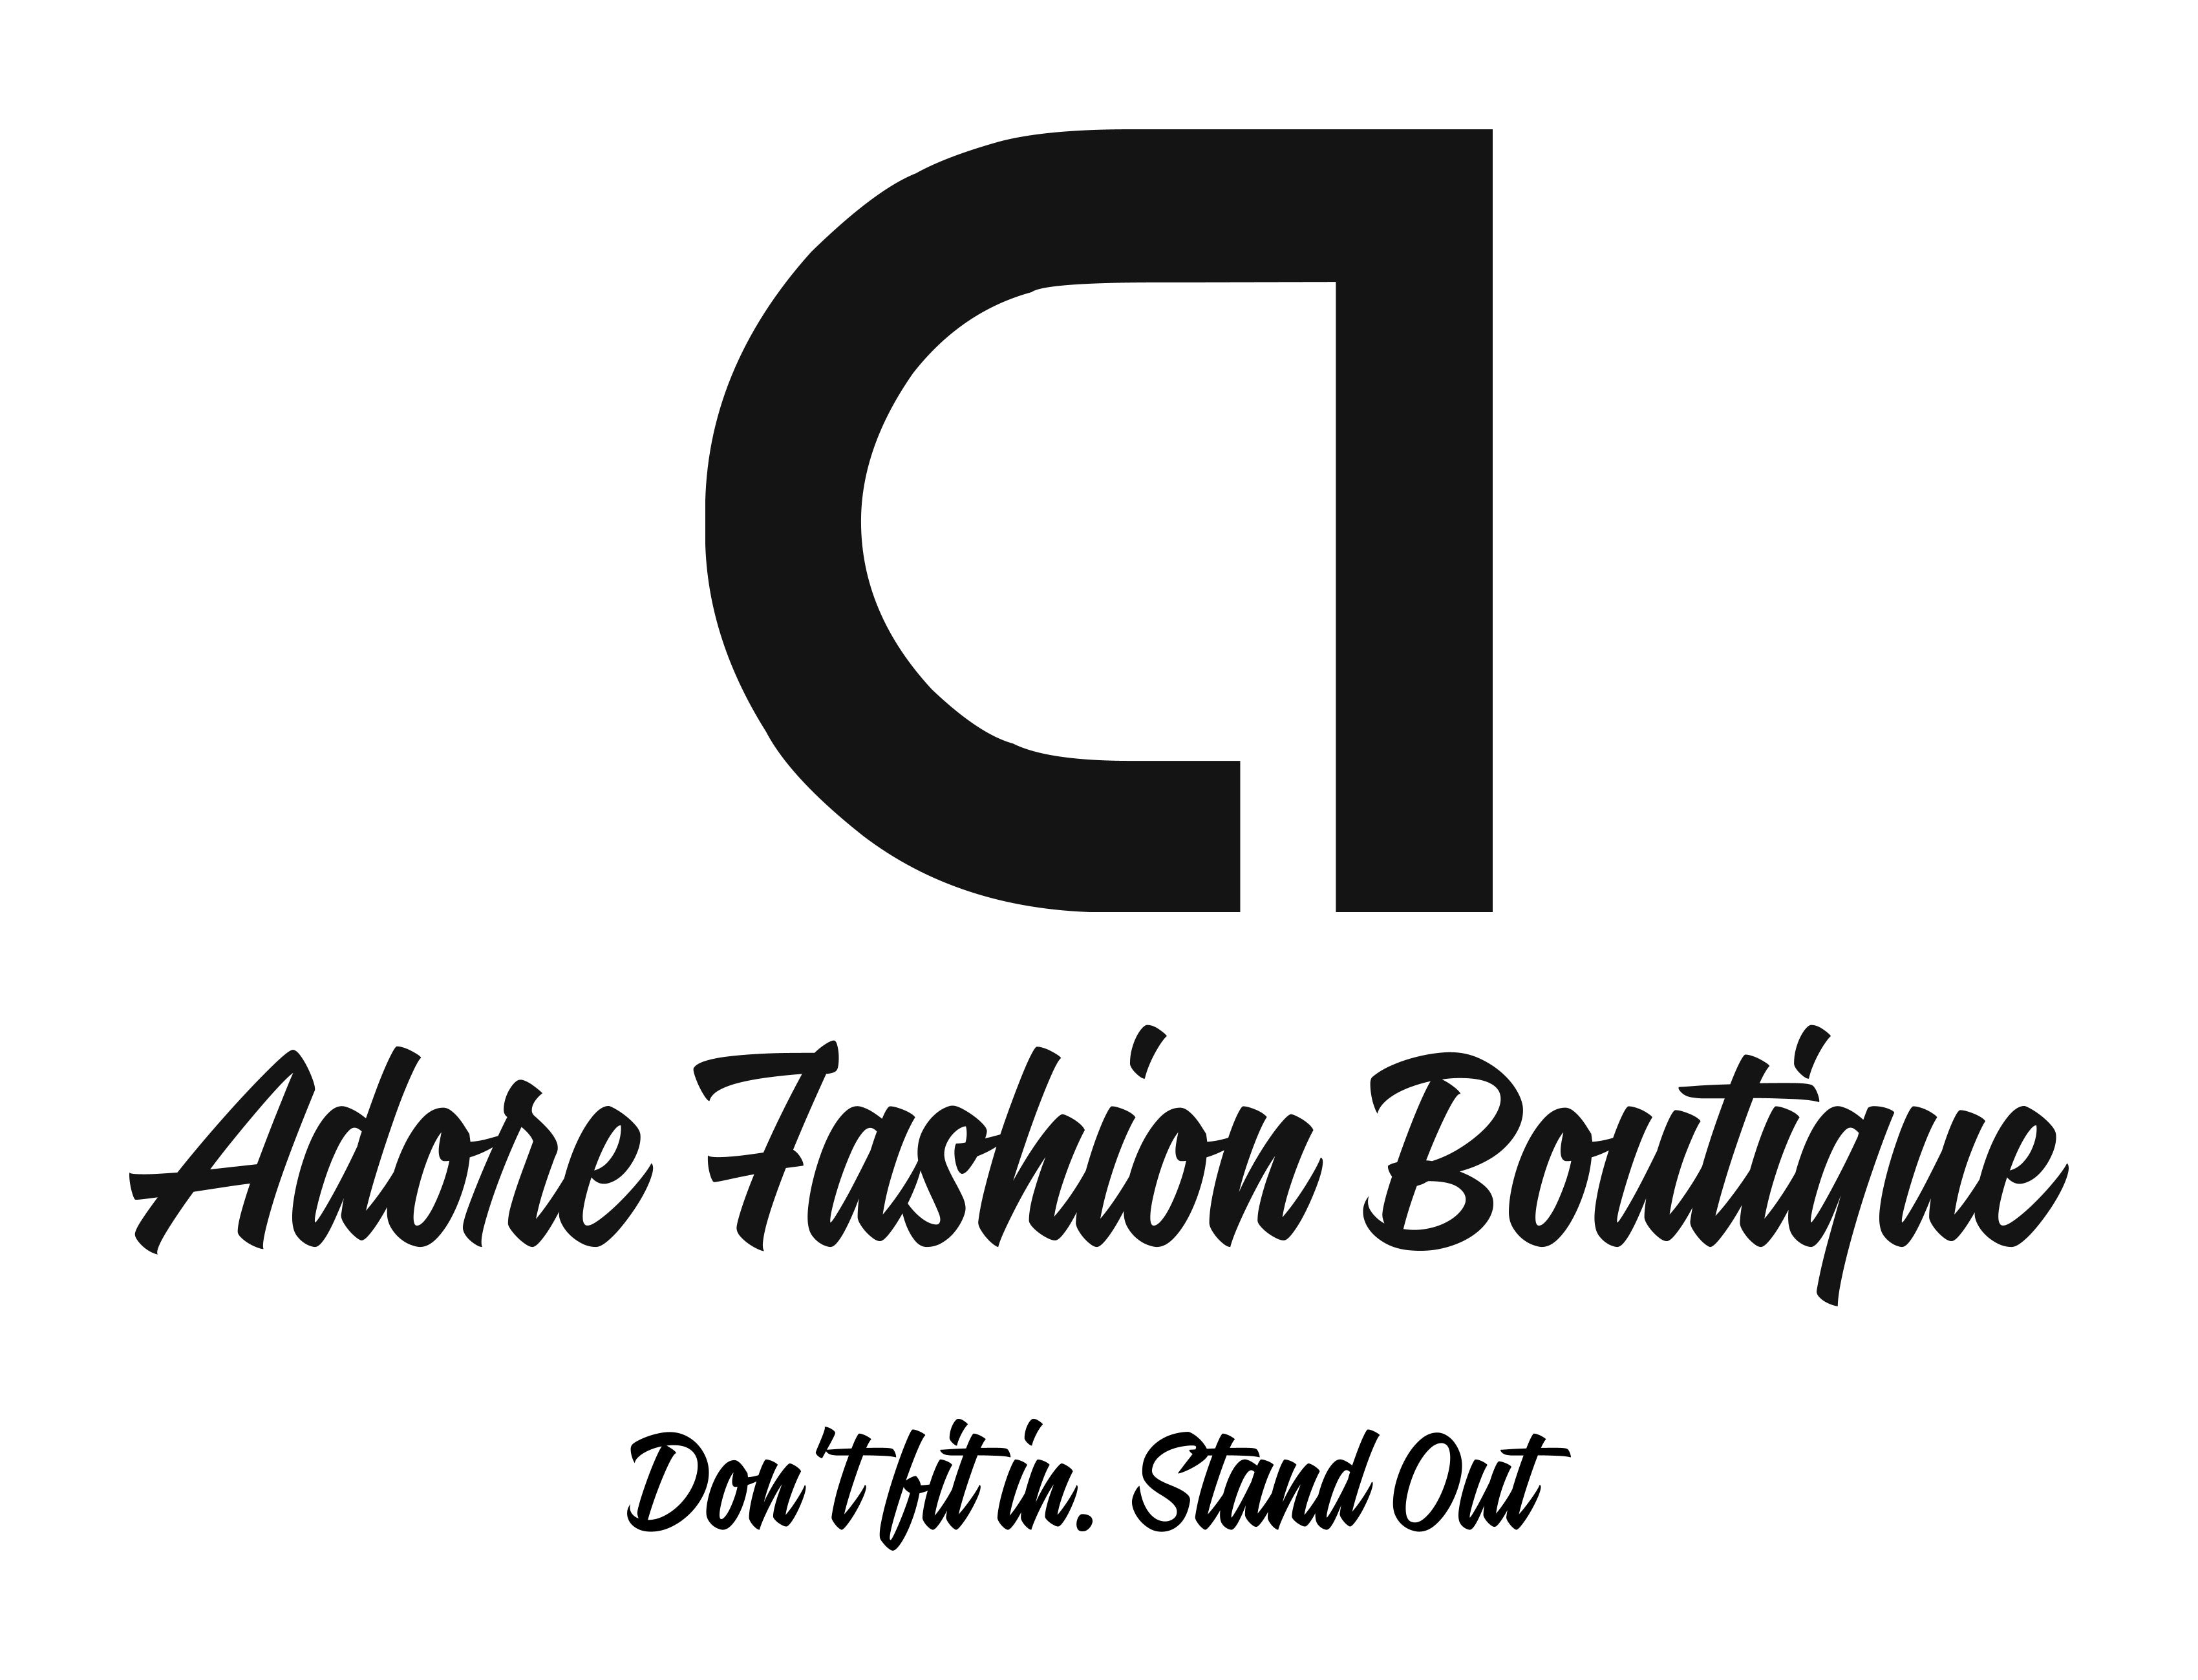 Adore Fshn Boutique